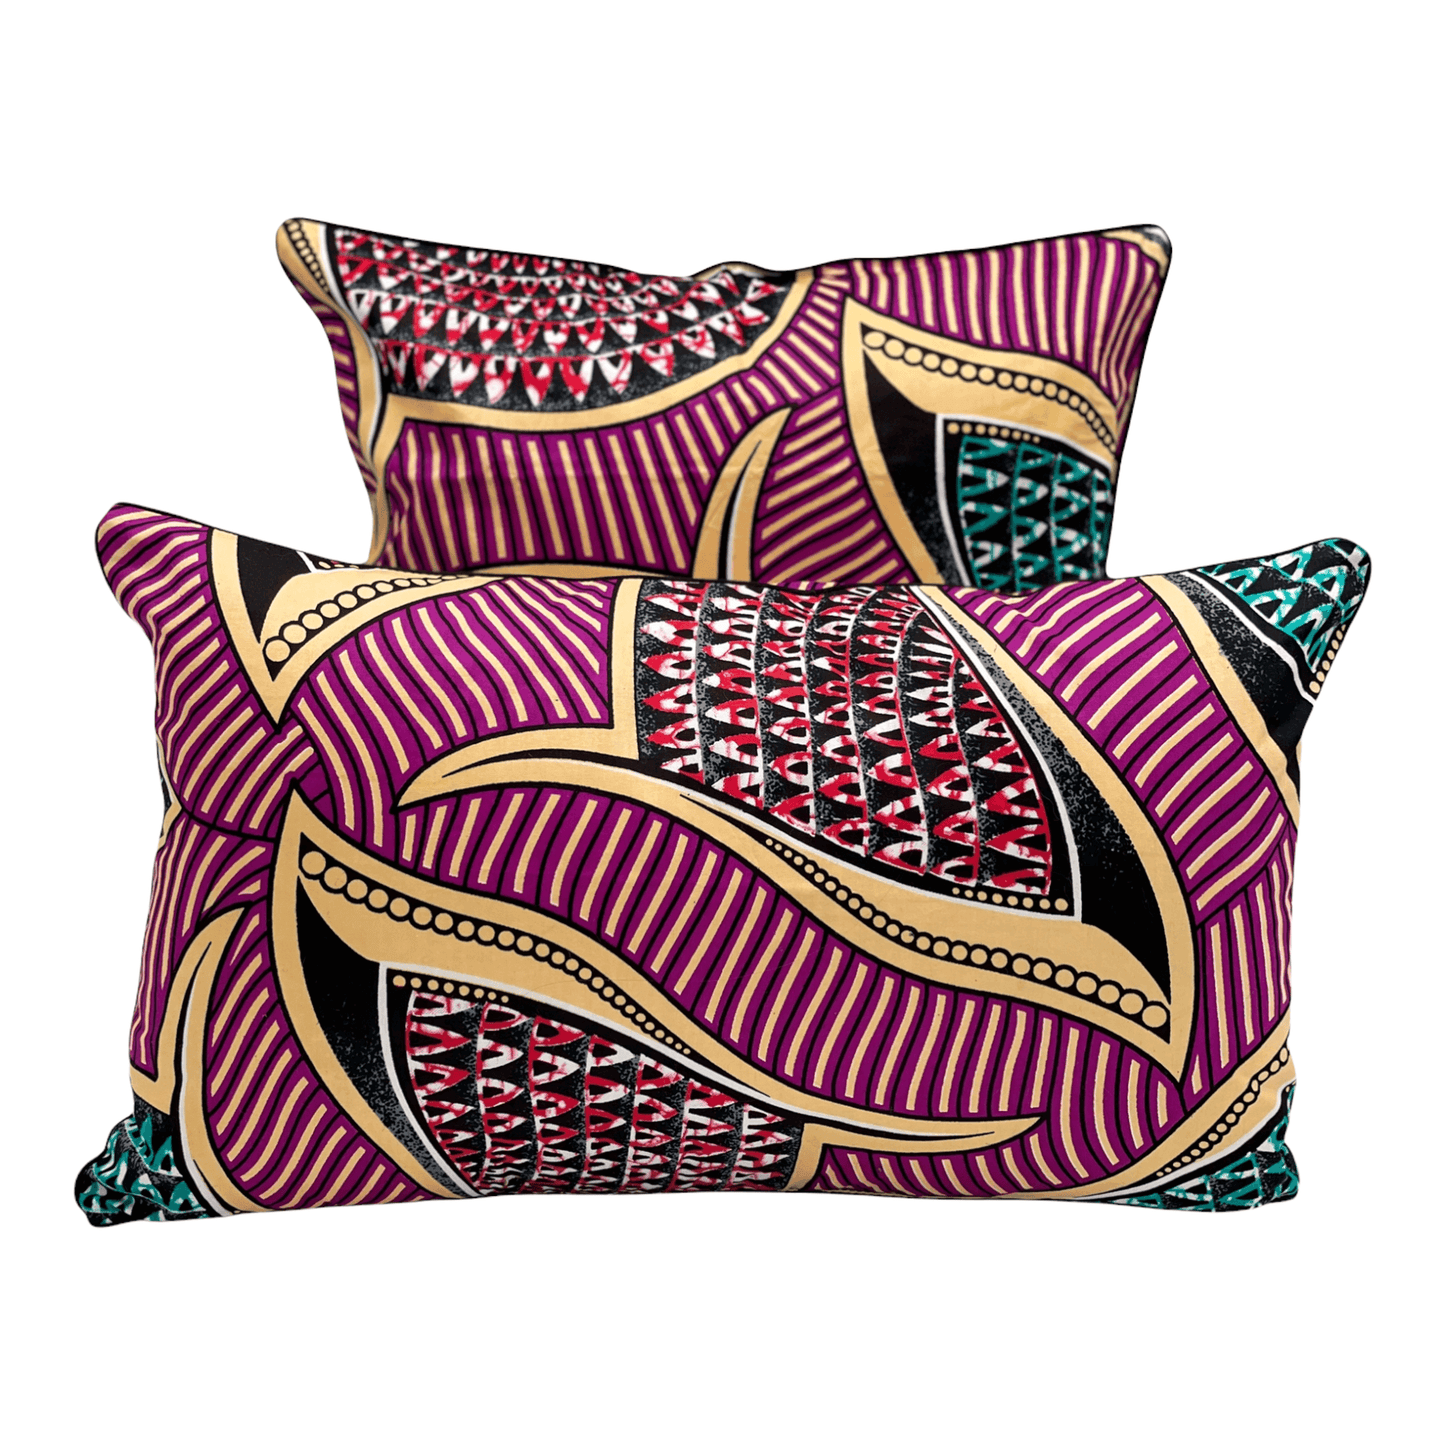 Ethnic cushion cover - Wax multicolored - WIMBI